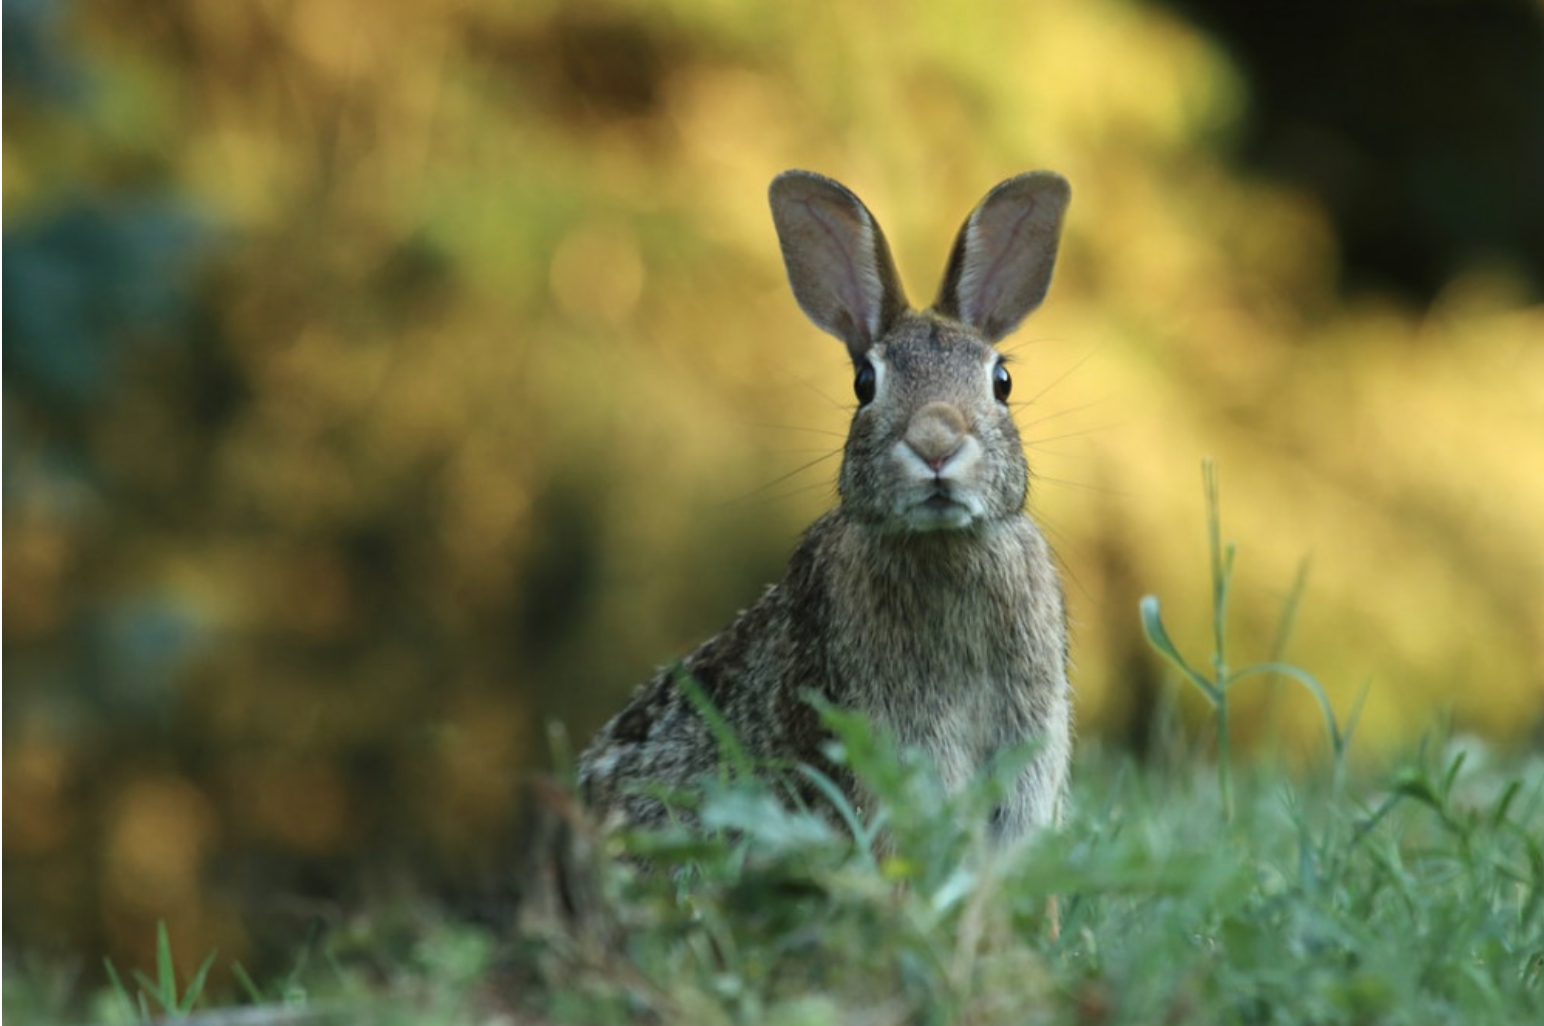 What Do Wild Rabbits Eat? - Wild rabbit looking surprised